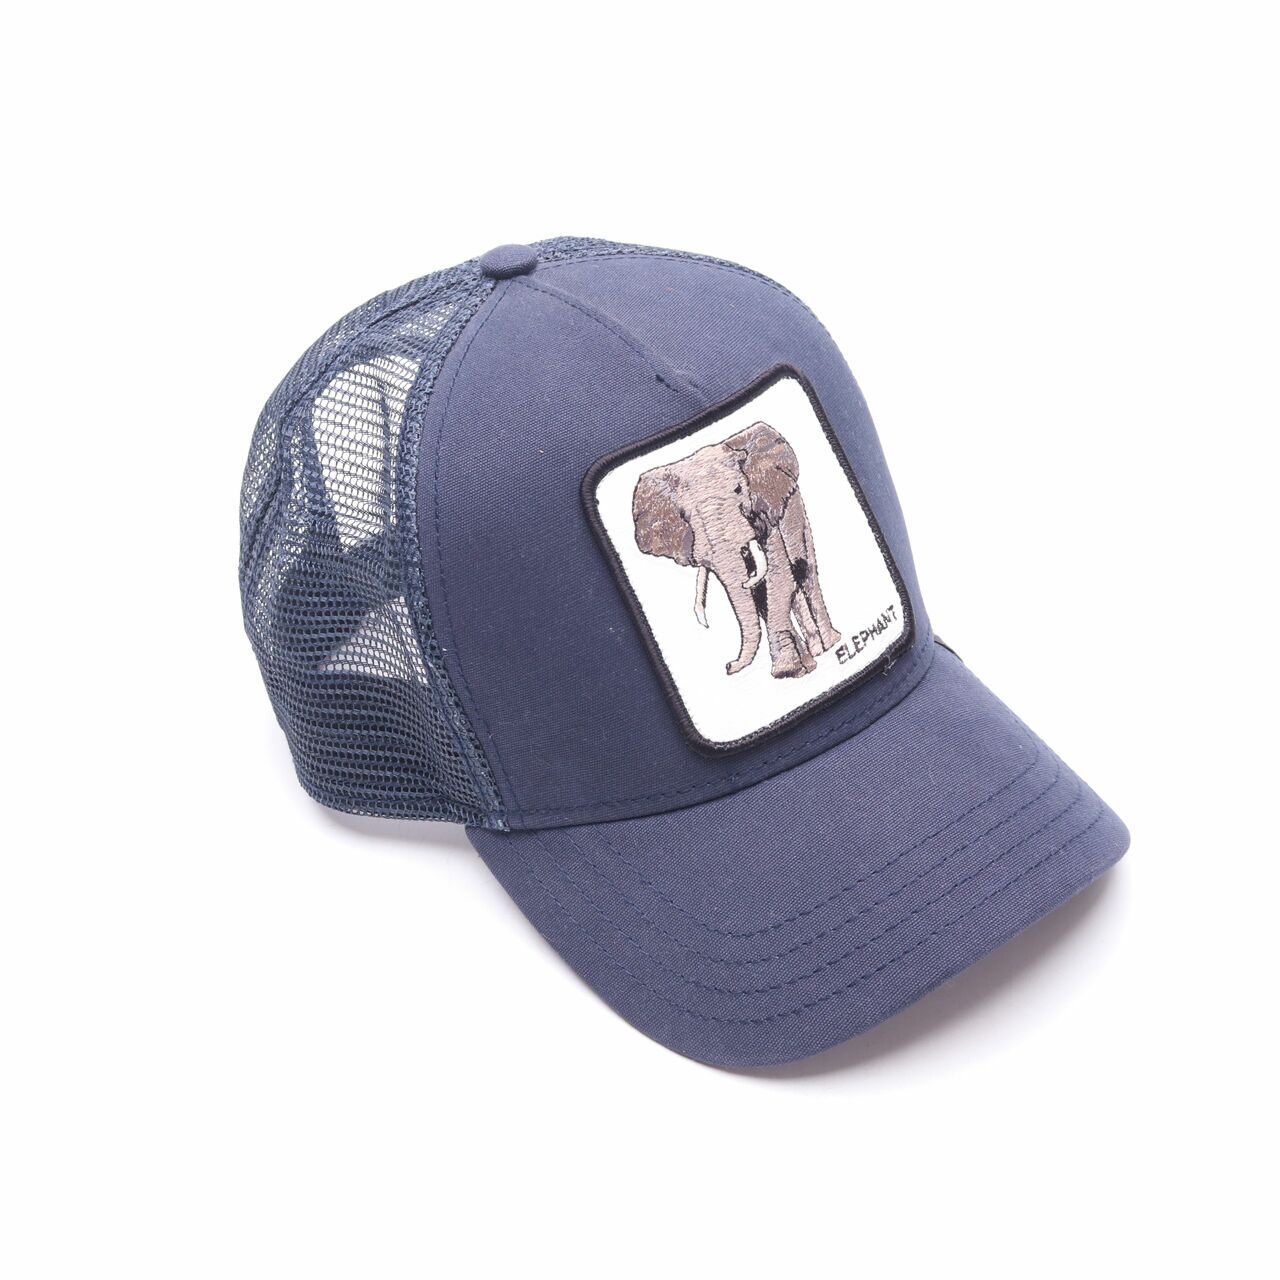 Goorin Bros Elephant Navy Hats